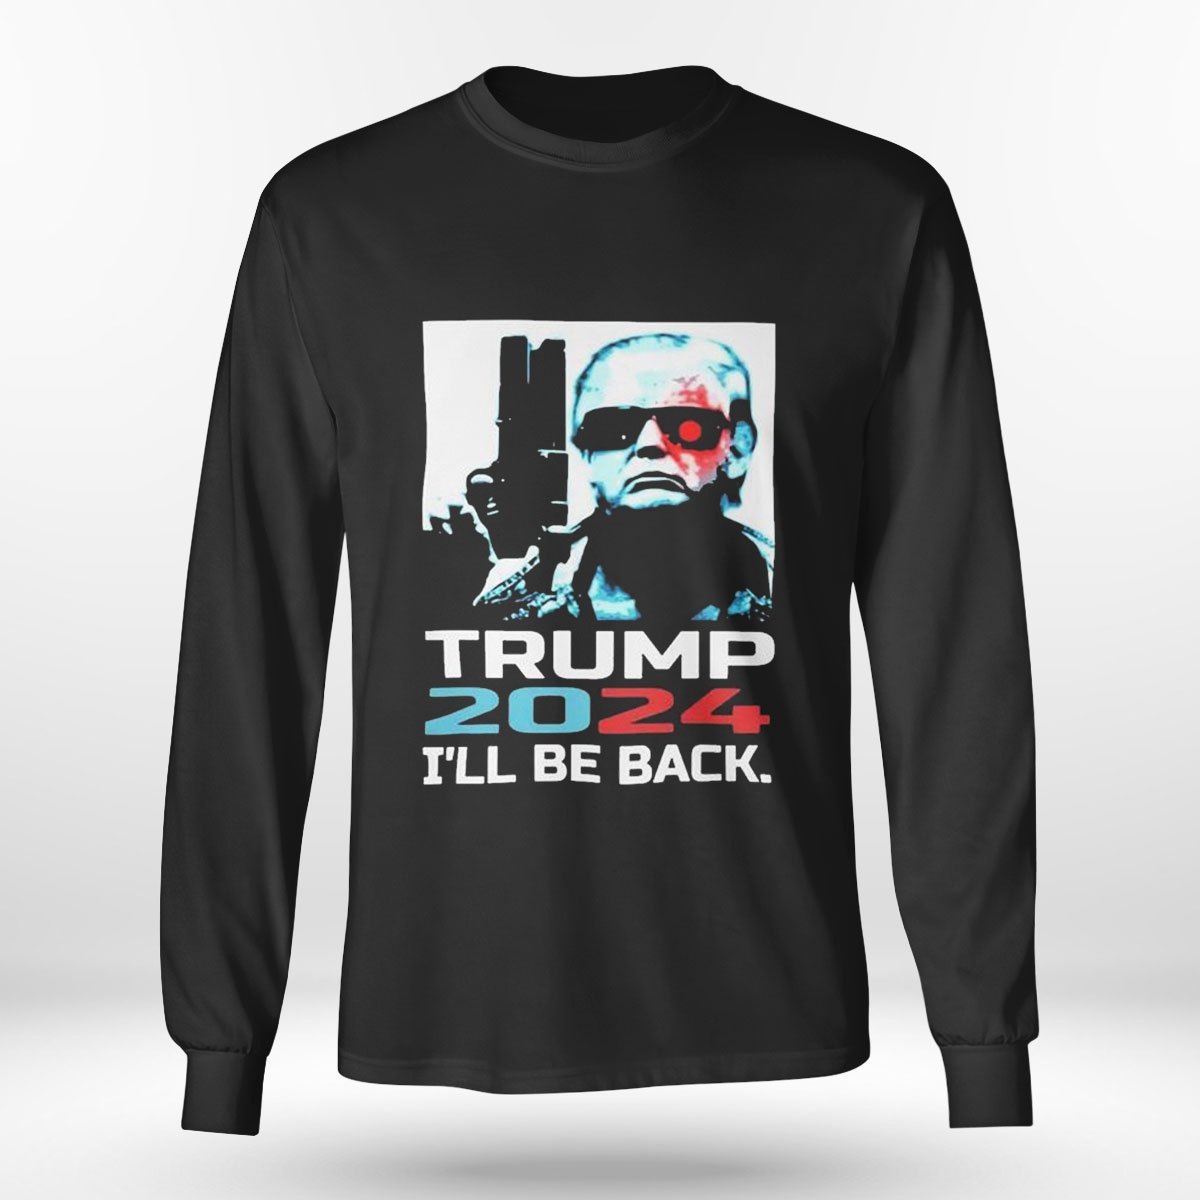 Trump 2024 Ill Be Back T-shirt